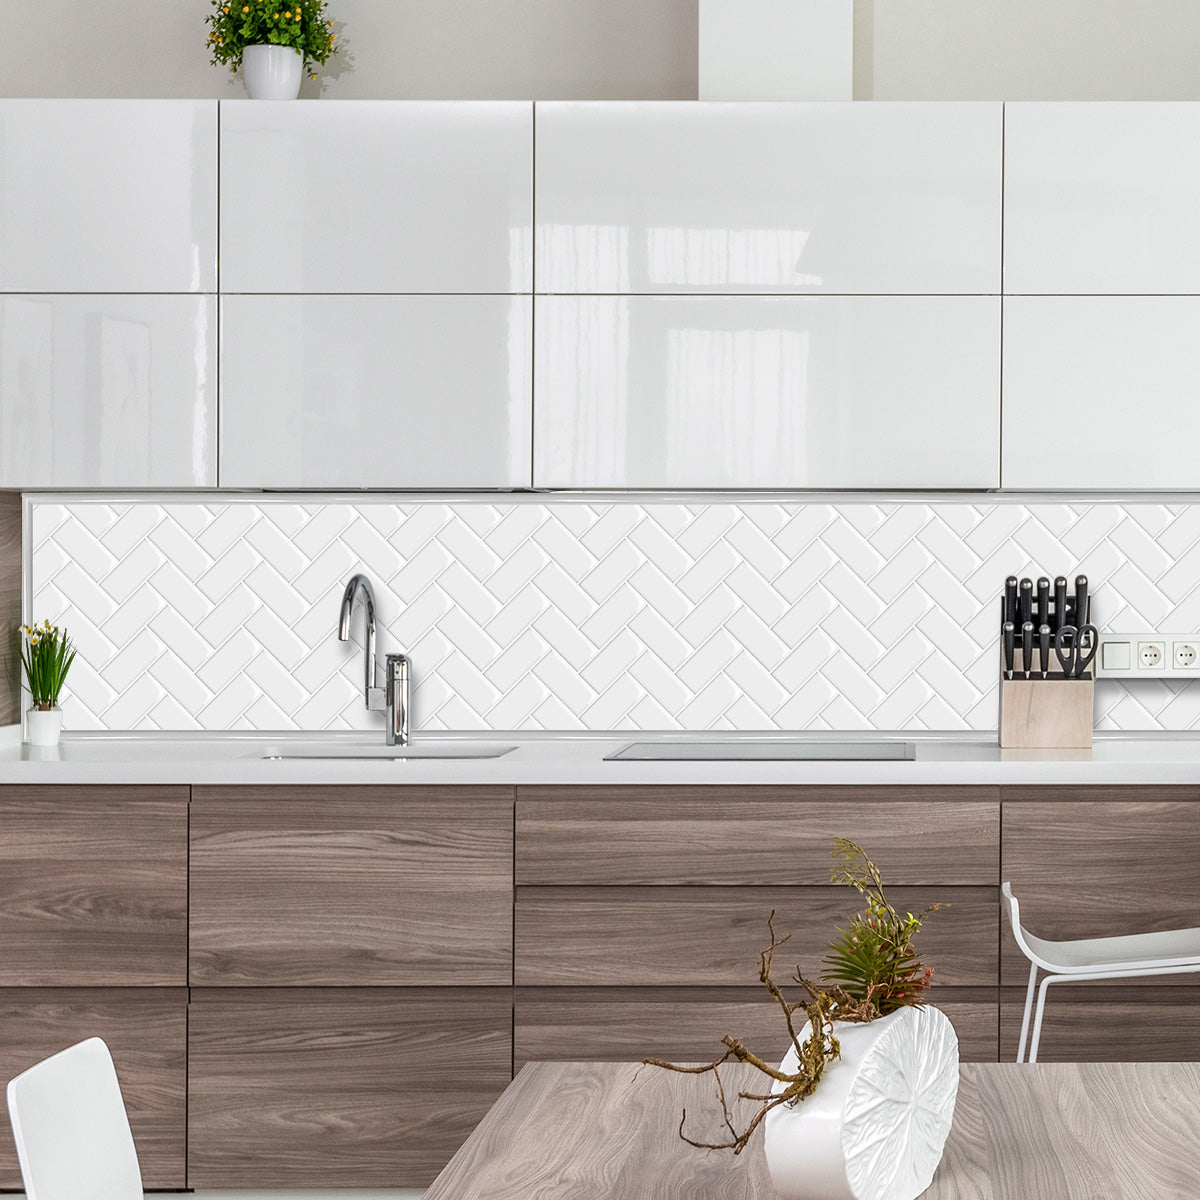 Grey edge trim around white kitchen tile splash back